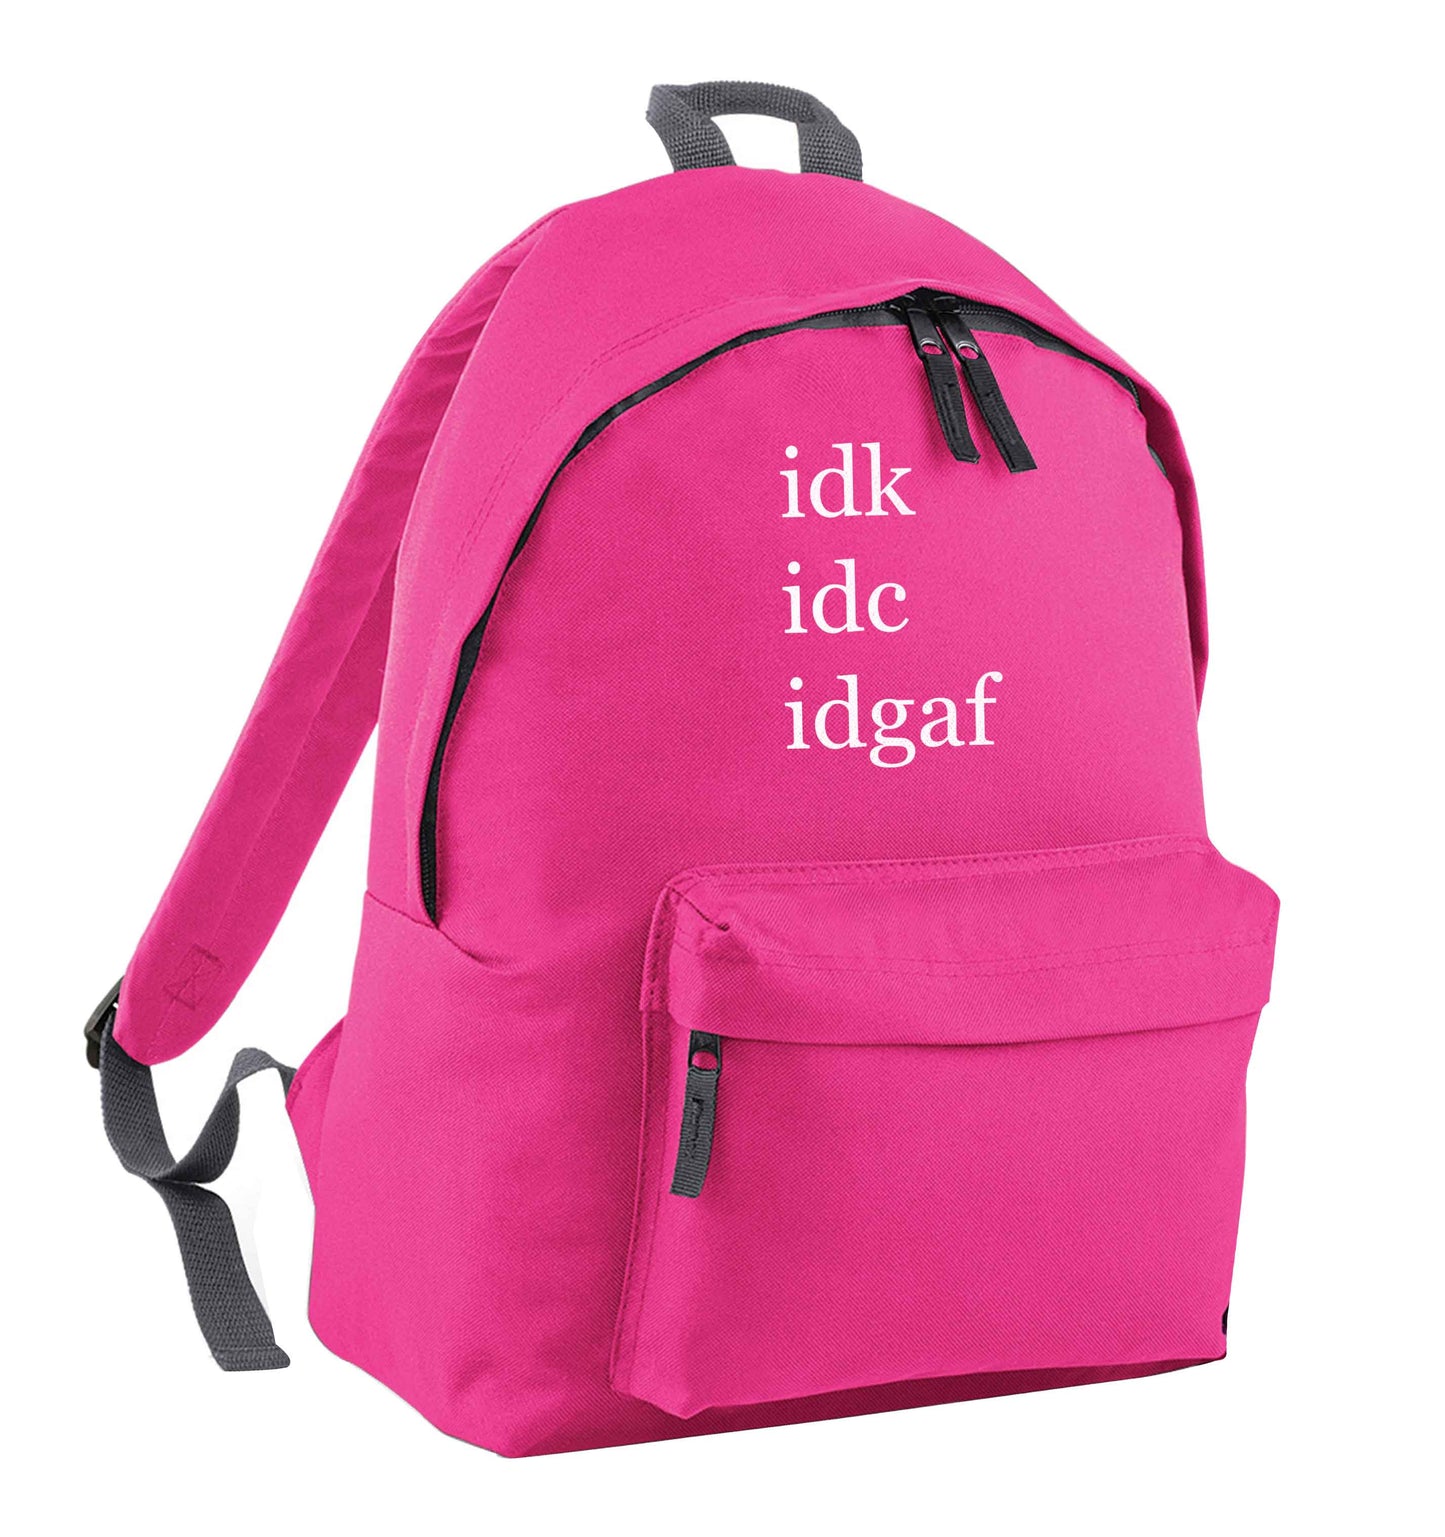 Idk Idc Idgaf pink adults backpack